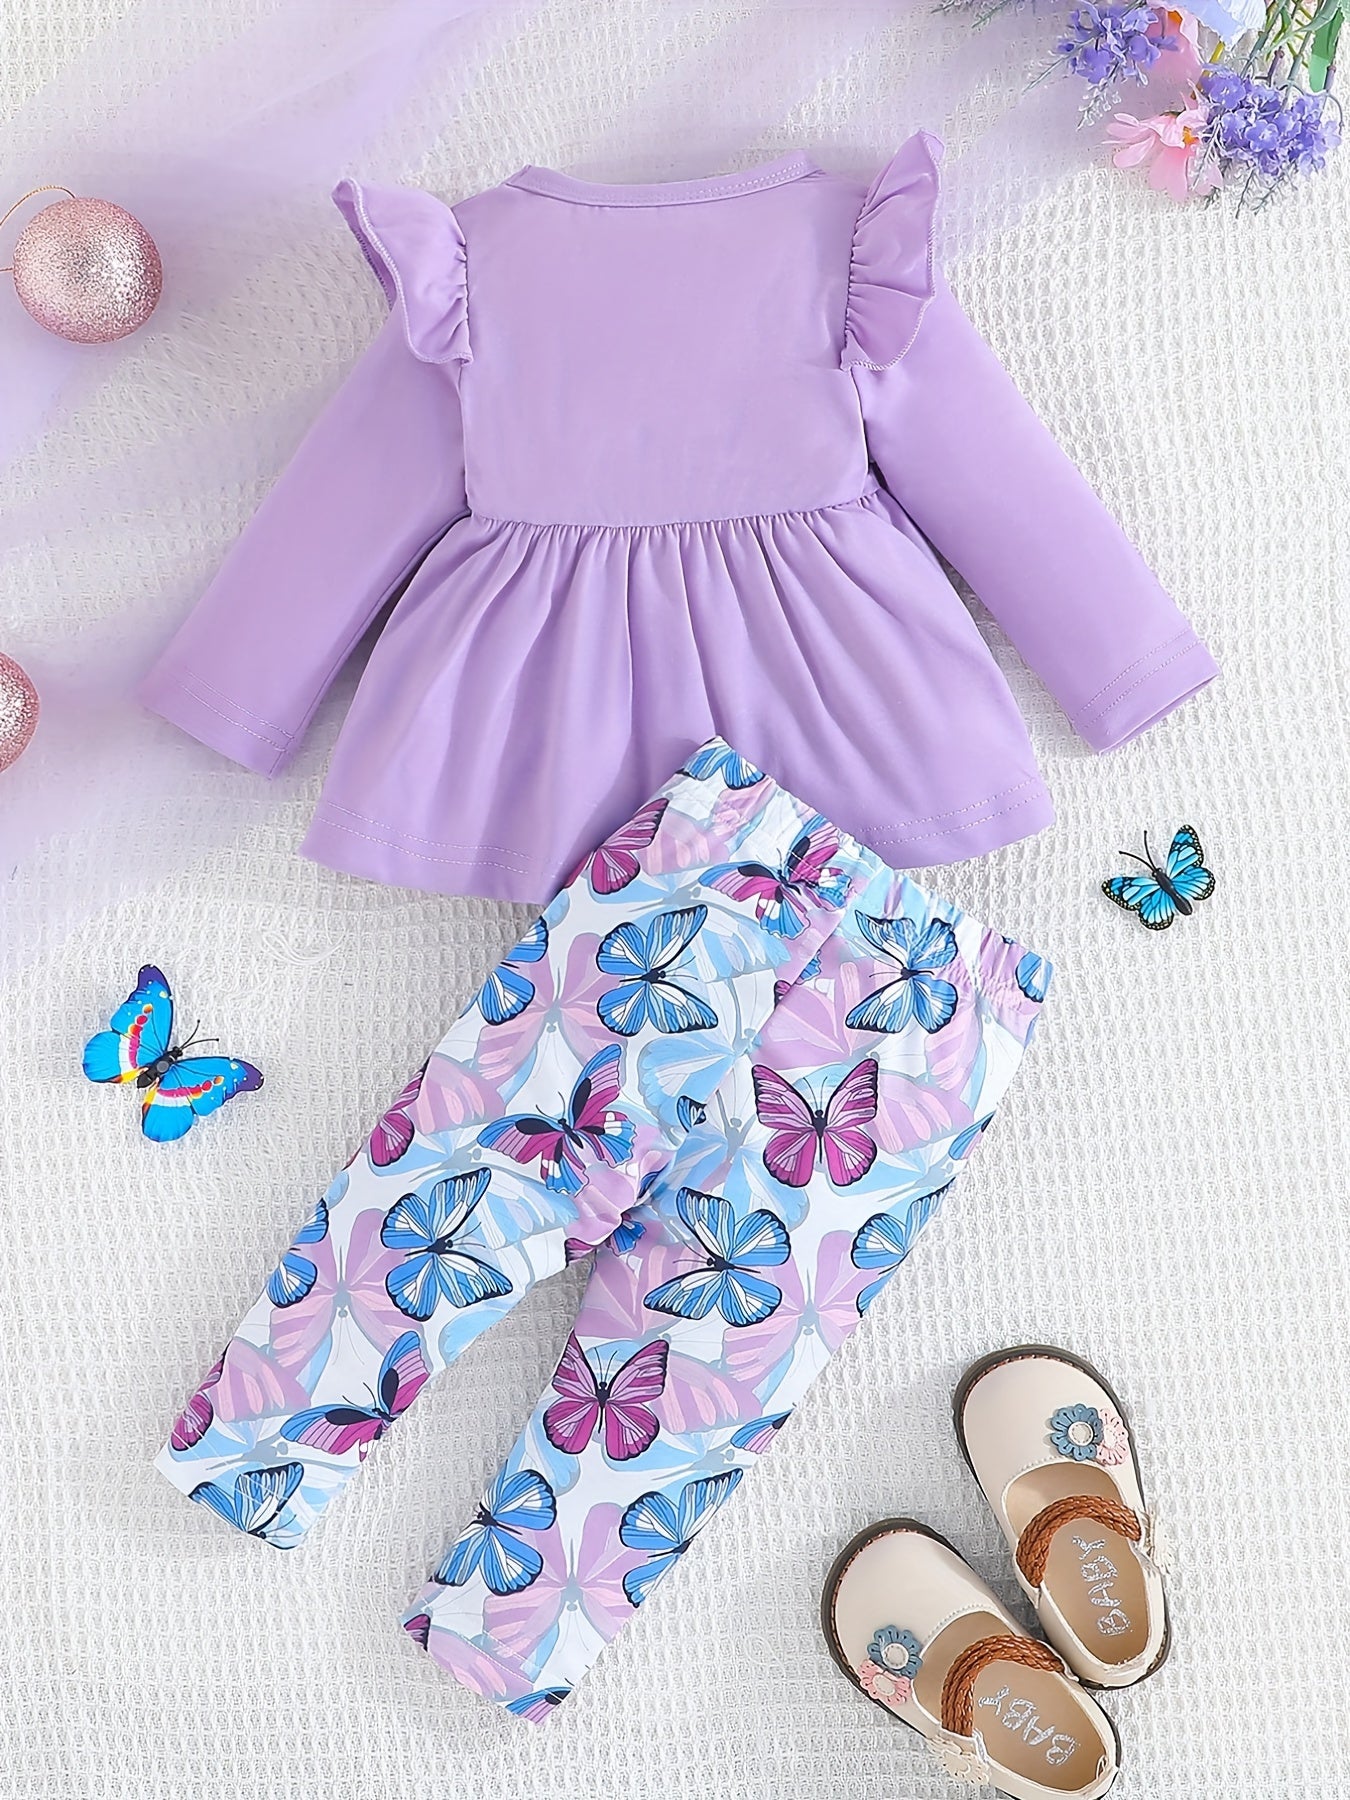 Baby Girls Bow Long Sleeve Romper + Butterfly Print Pants 2pcs Set